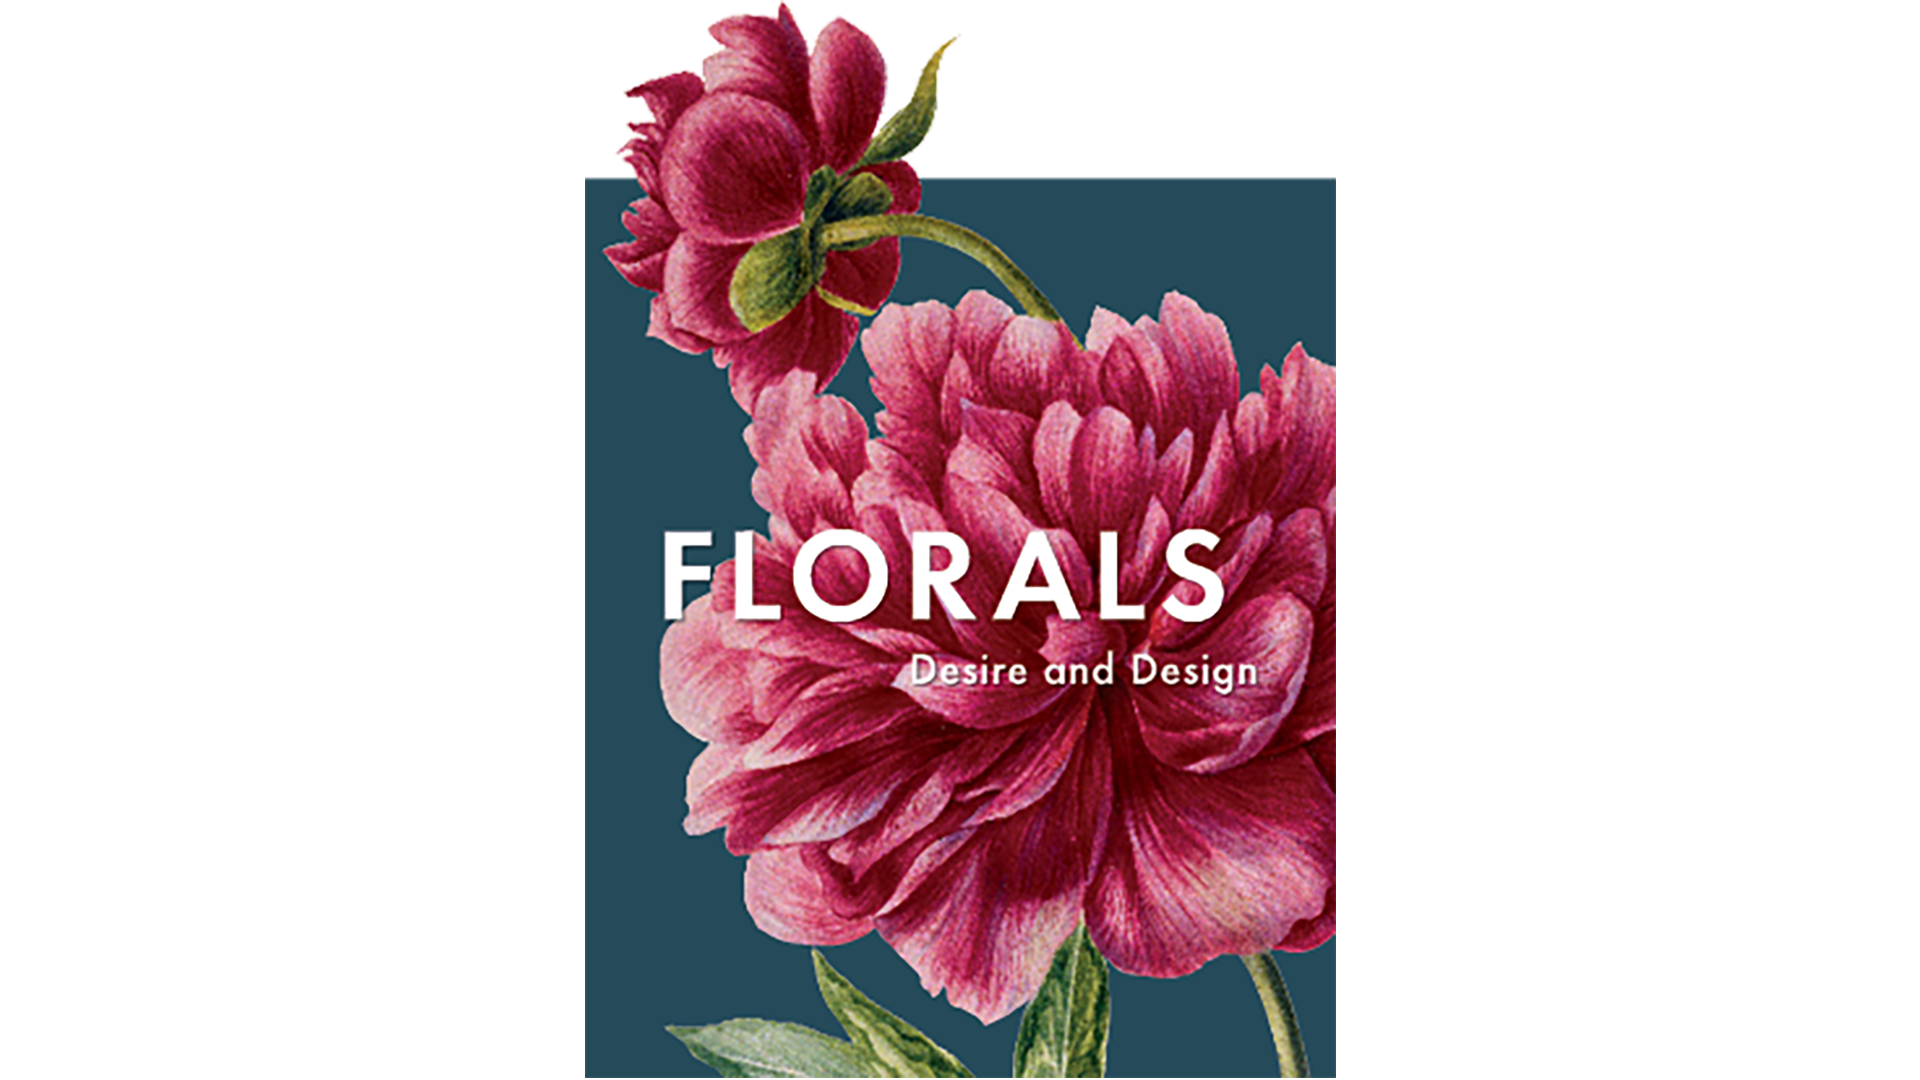 Florals: Desire and Design.